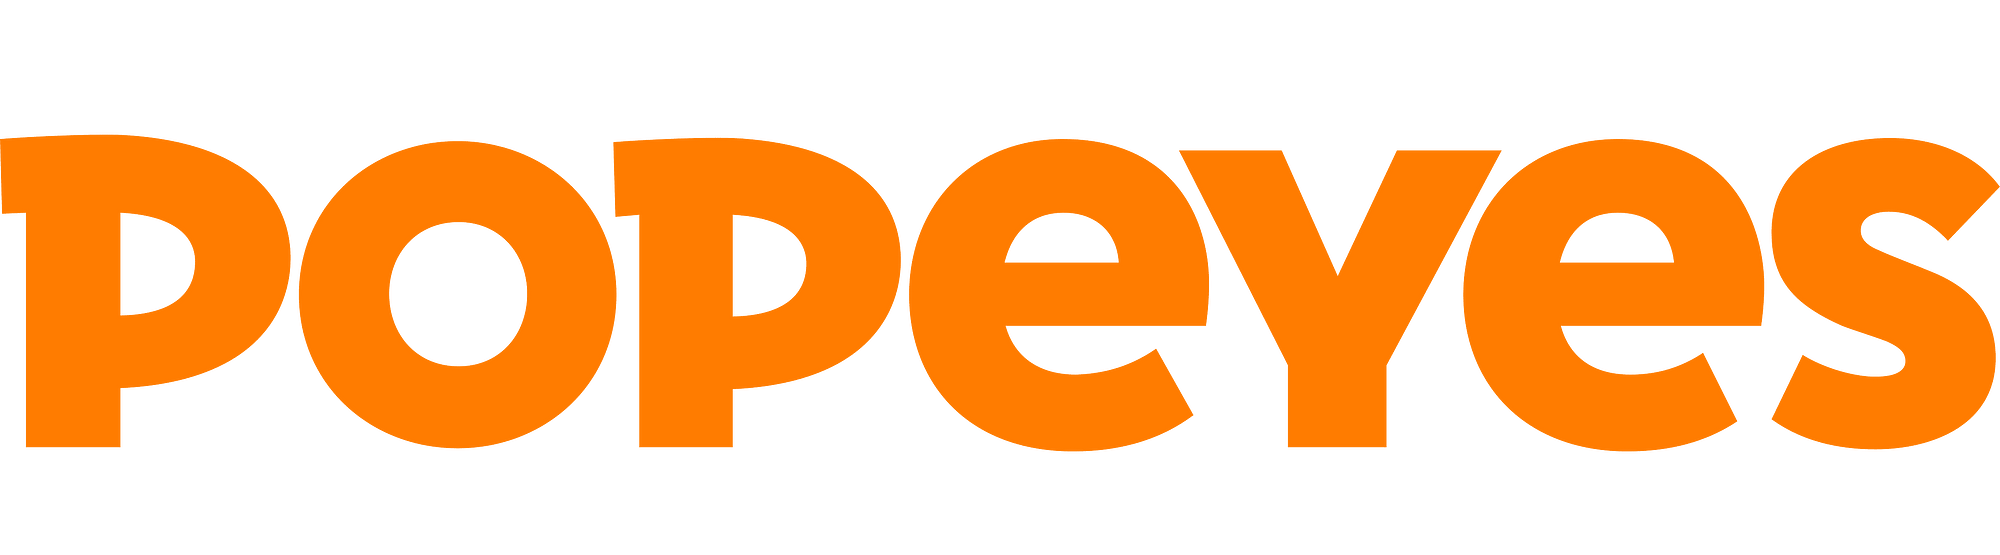 Popeyes Logo PNG